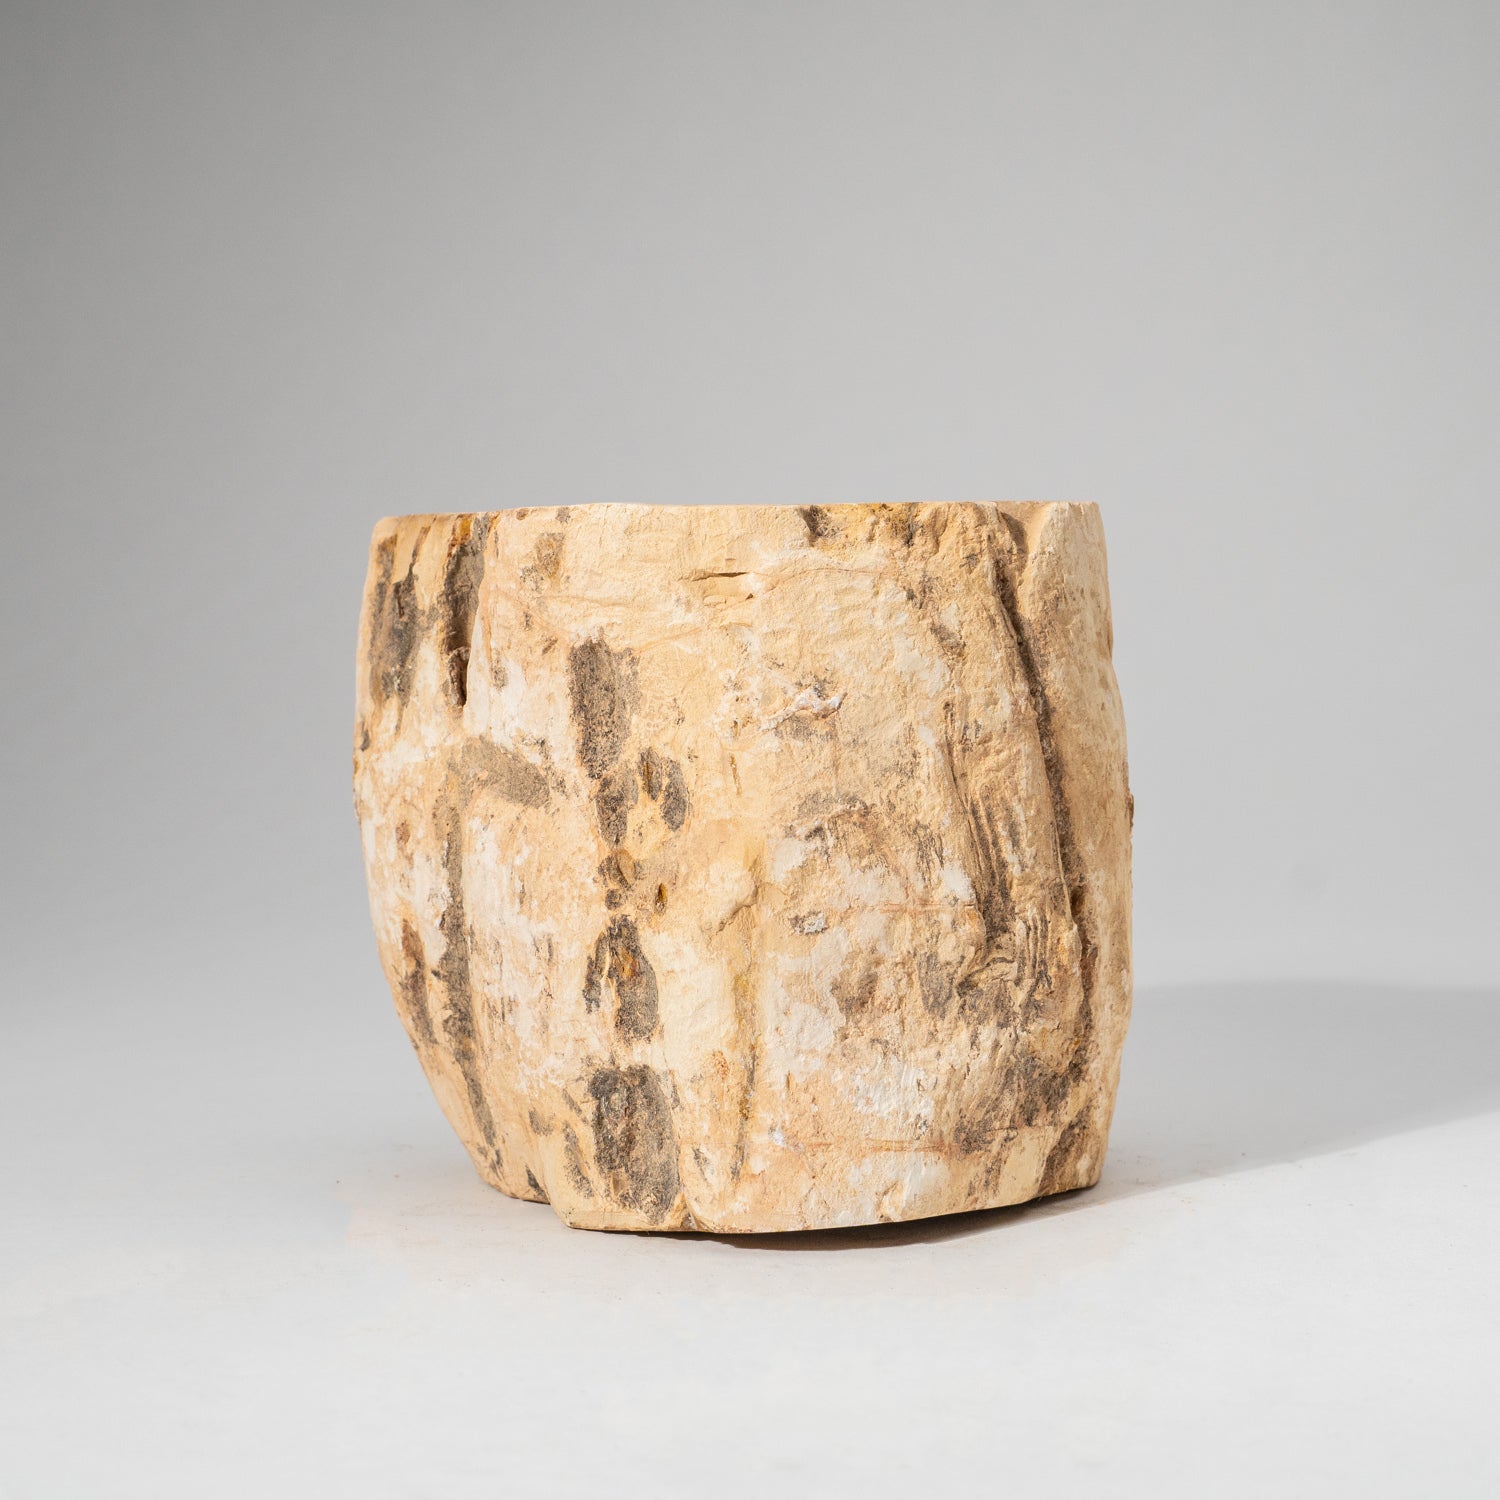 Natural Petrified Wood Log from Madagascar (3.2 lbs)